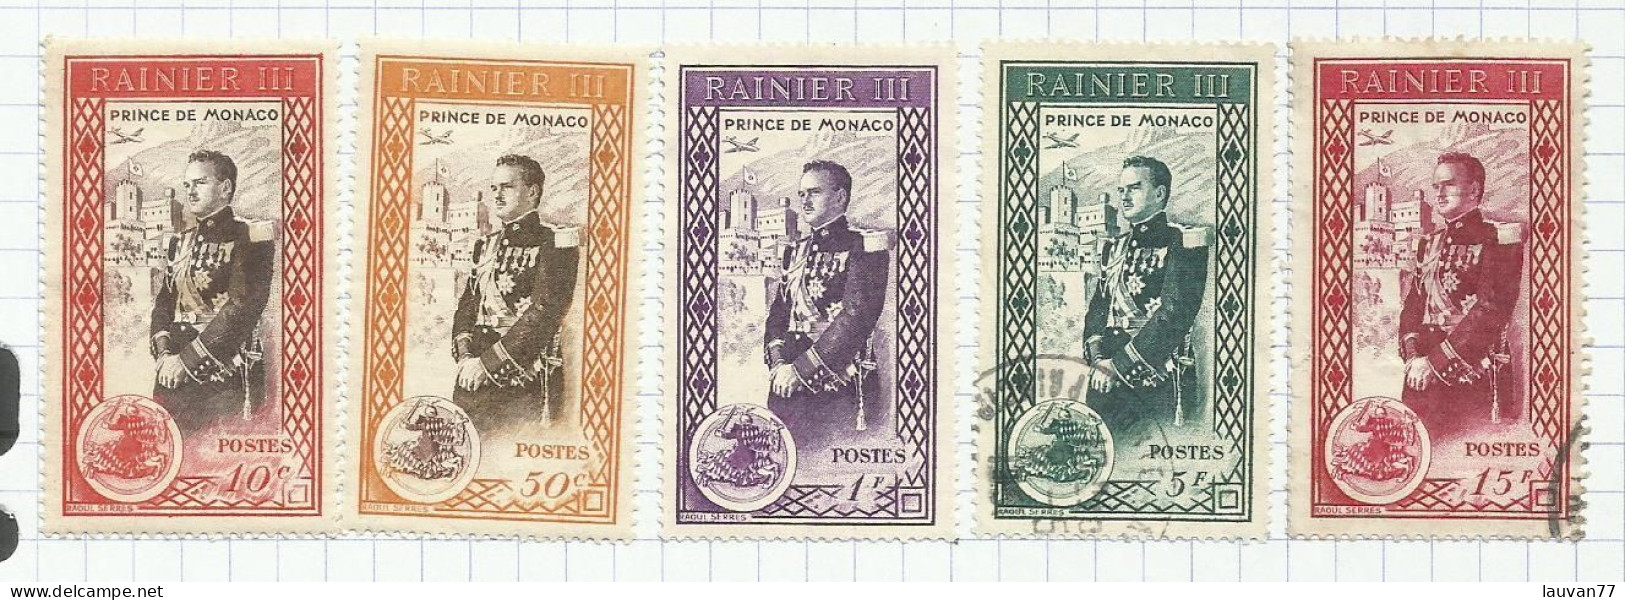 Monaco N°338 à 342 Cote 9.60€ - Used Stamps